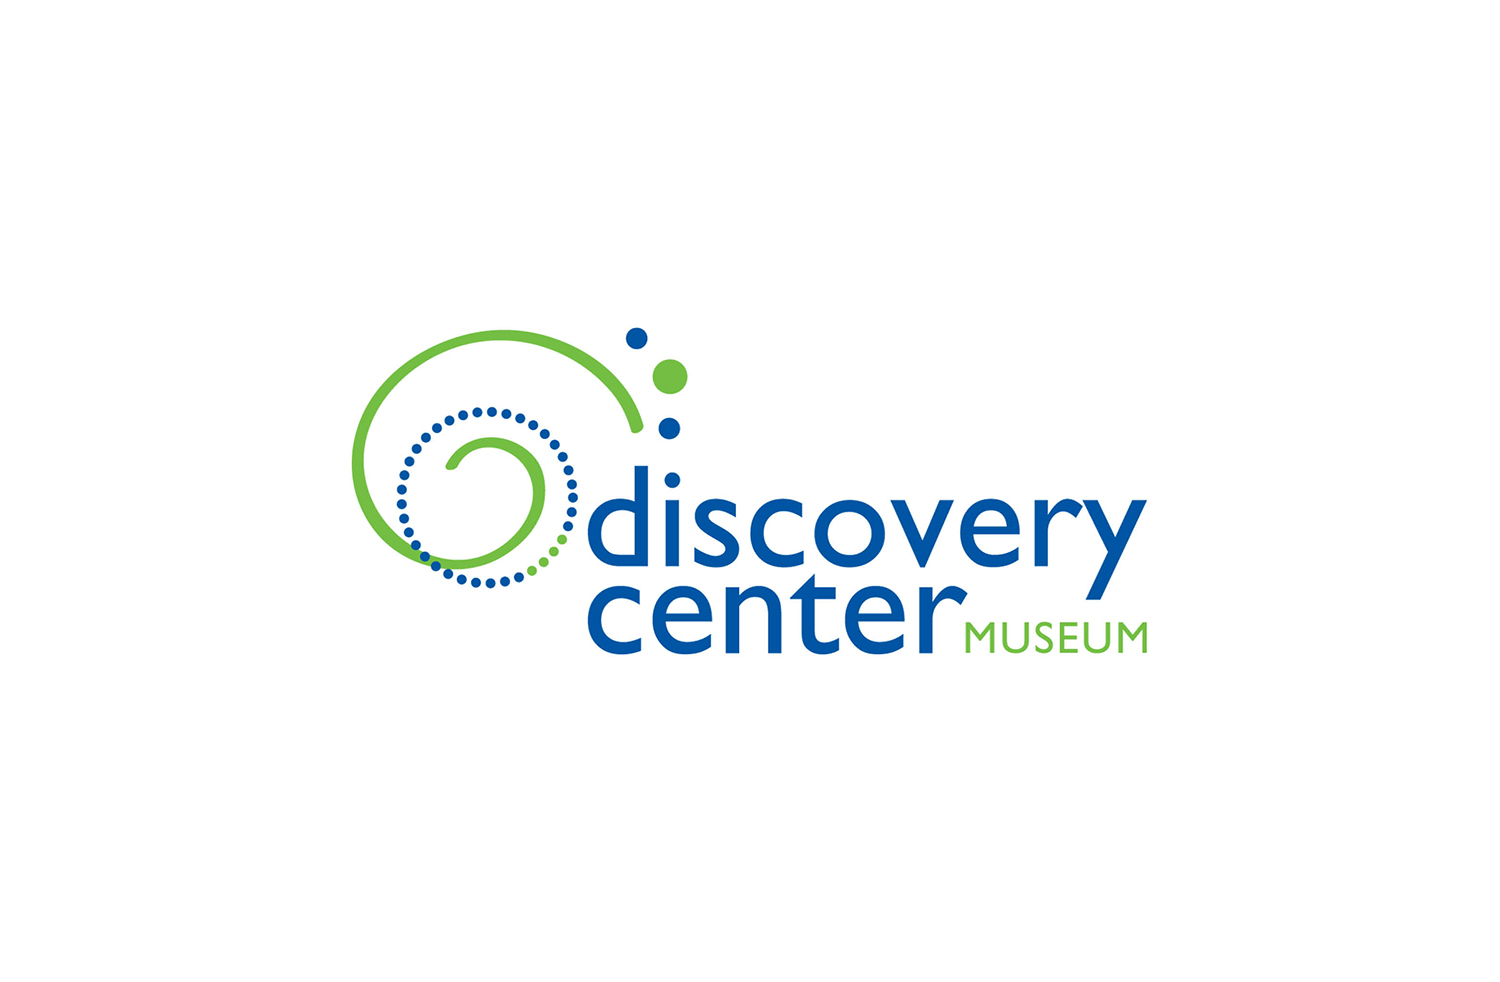 Boss_Display_Client_Discovery_Center_Museum_Logo.jpg